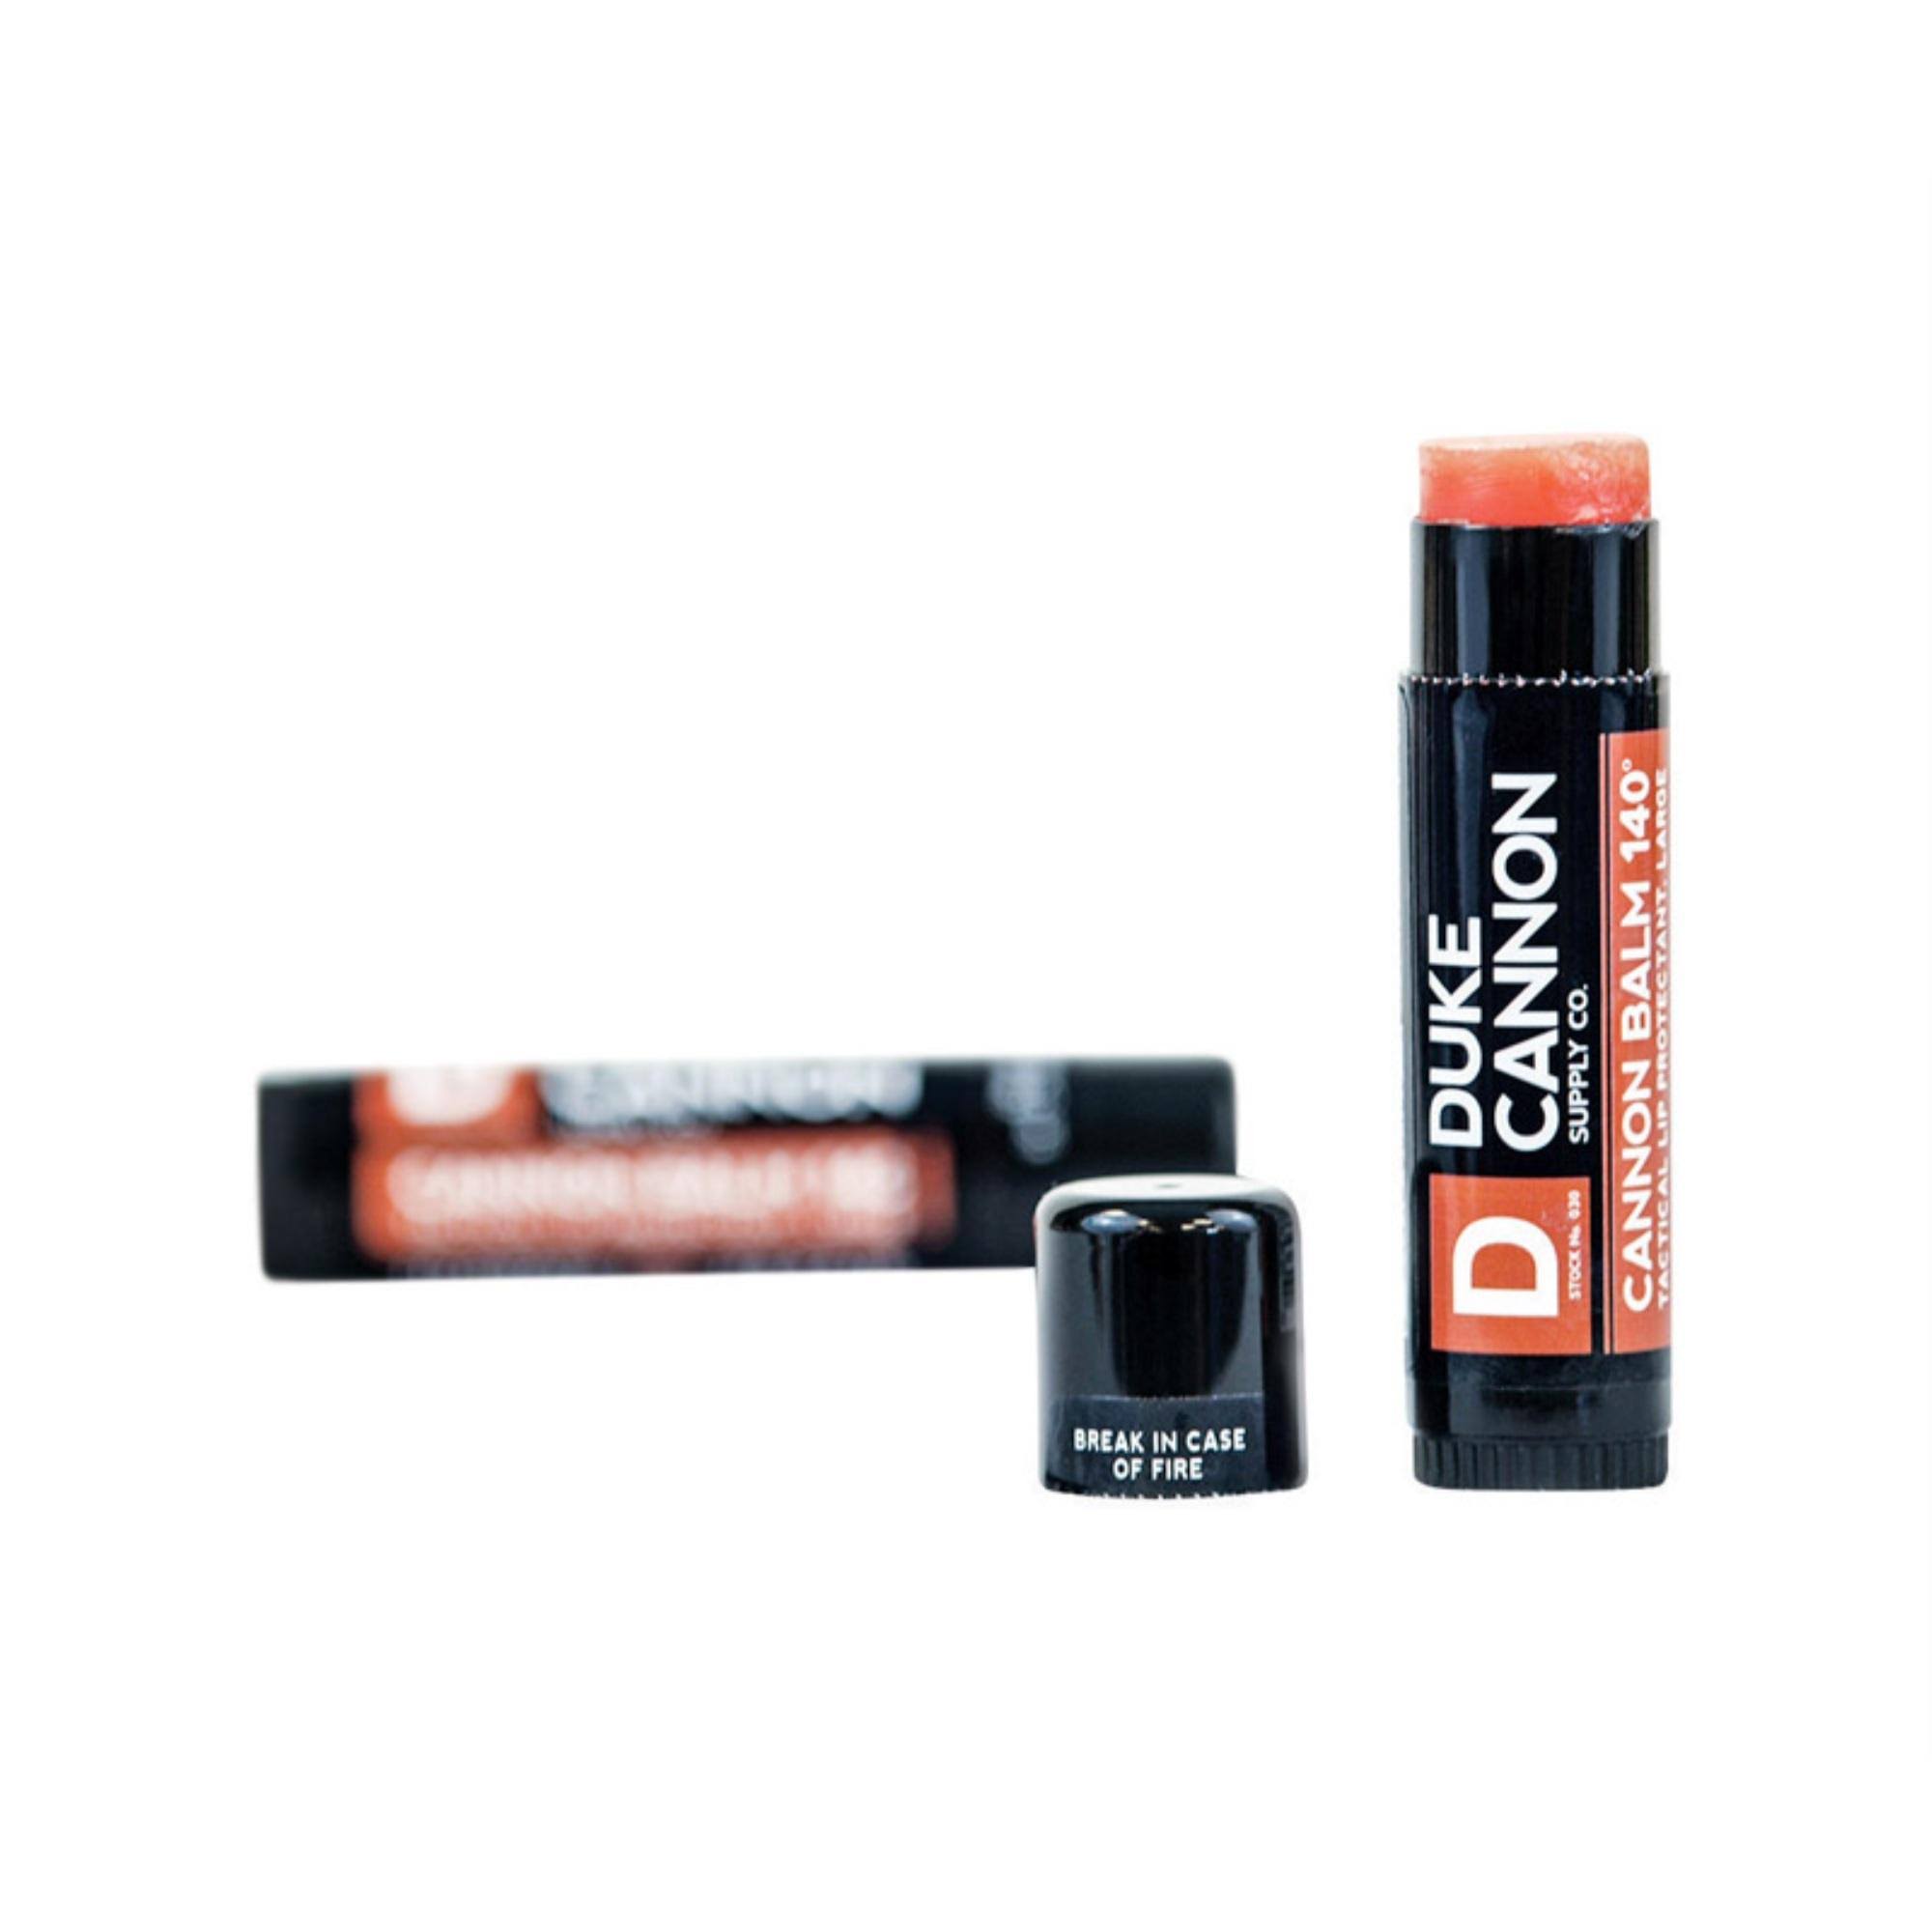 Duke Cannon Supply Lip Balm, Blood Orange Mint, SPF 30 - 0.56 oz